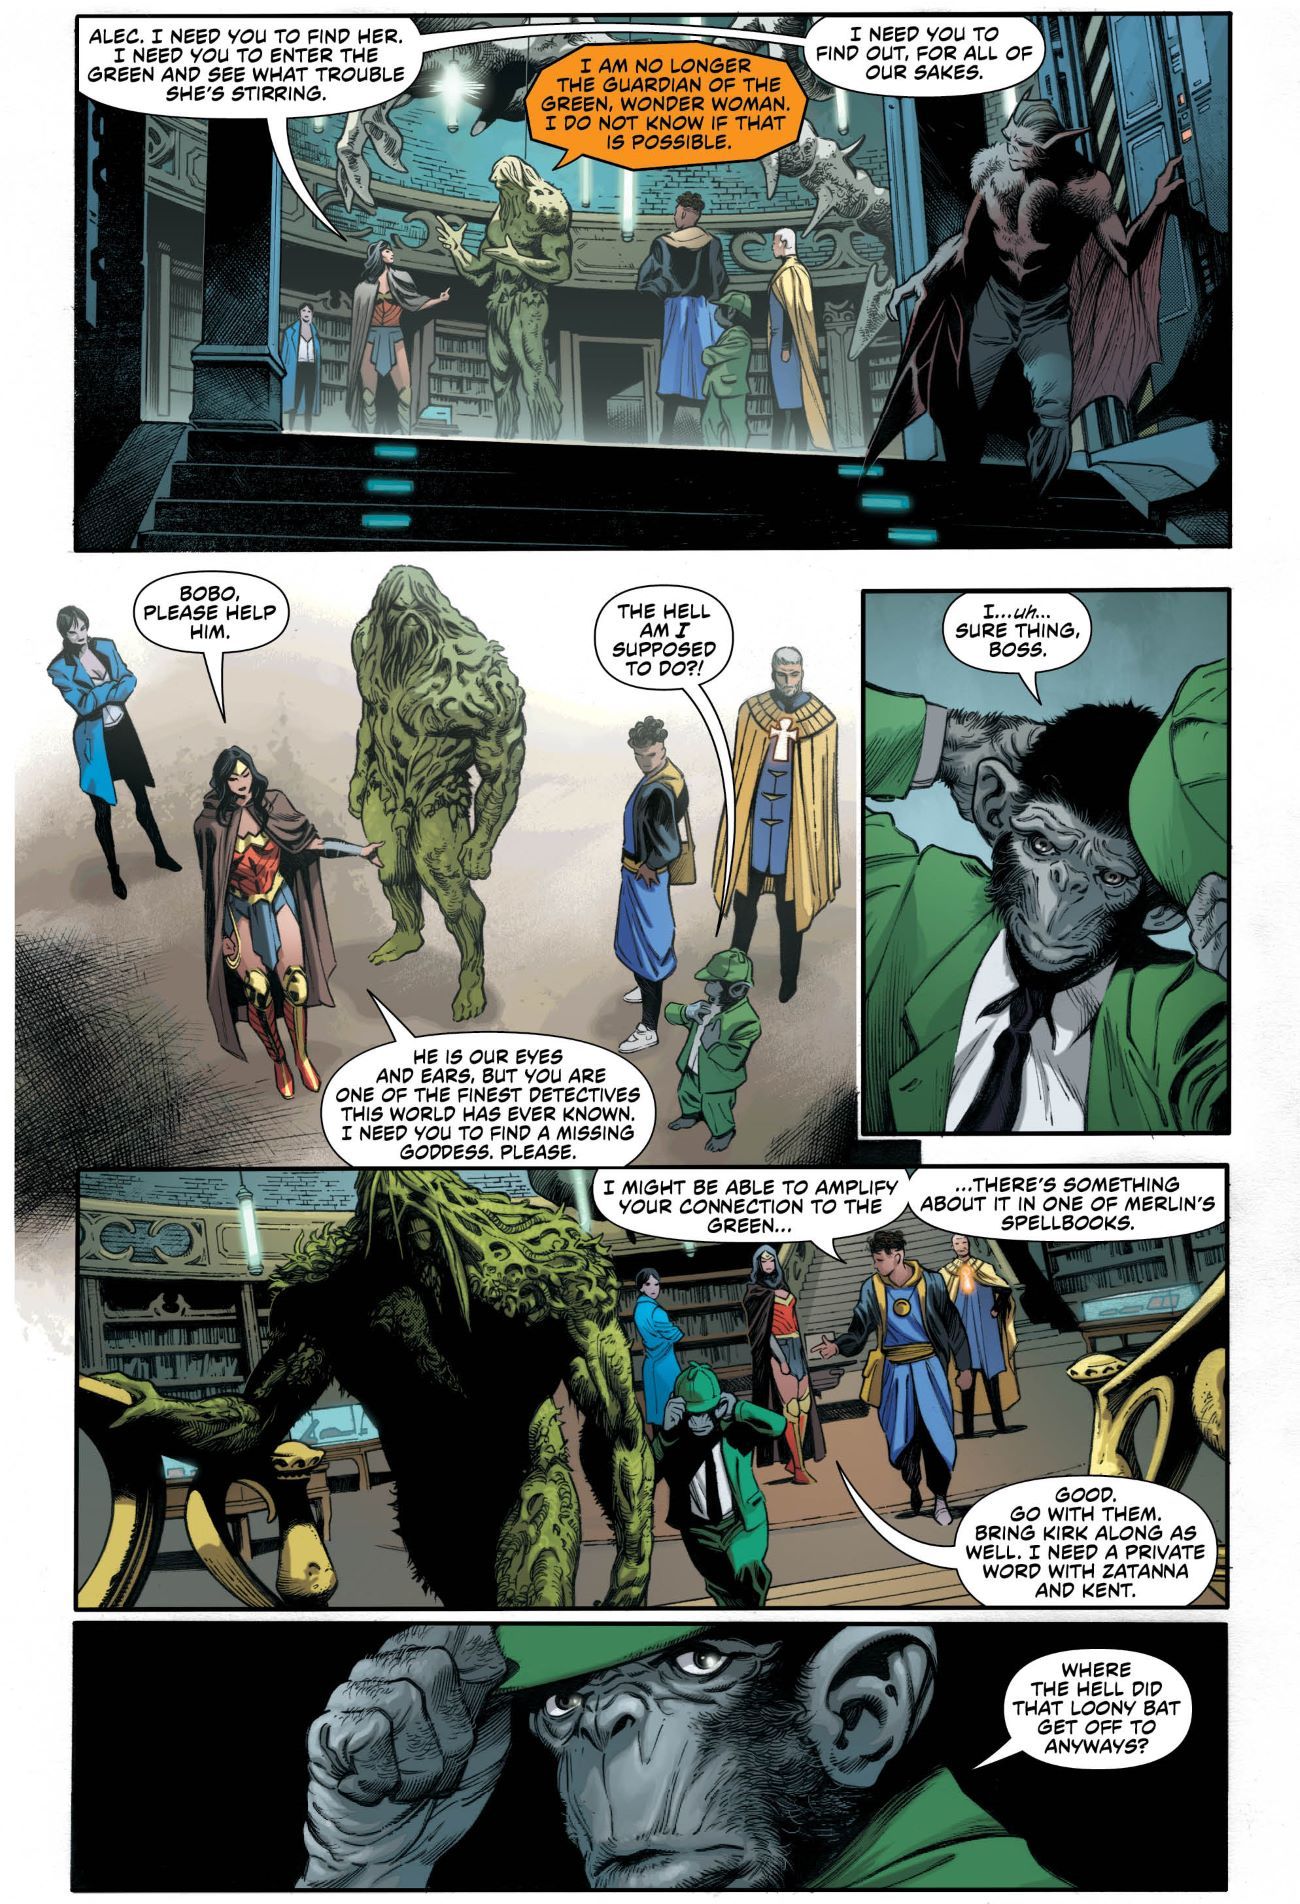 Justice League Dark 15 Comic Preview 4